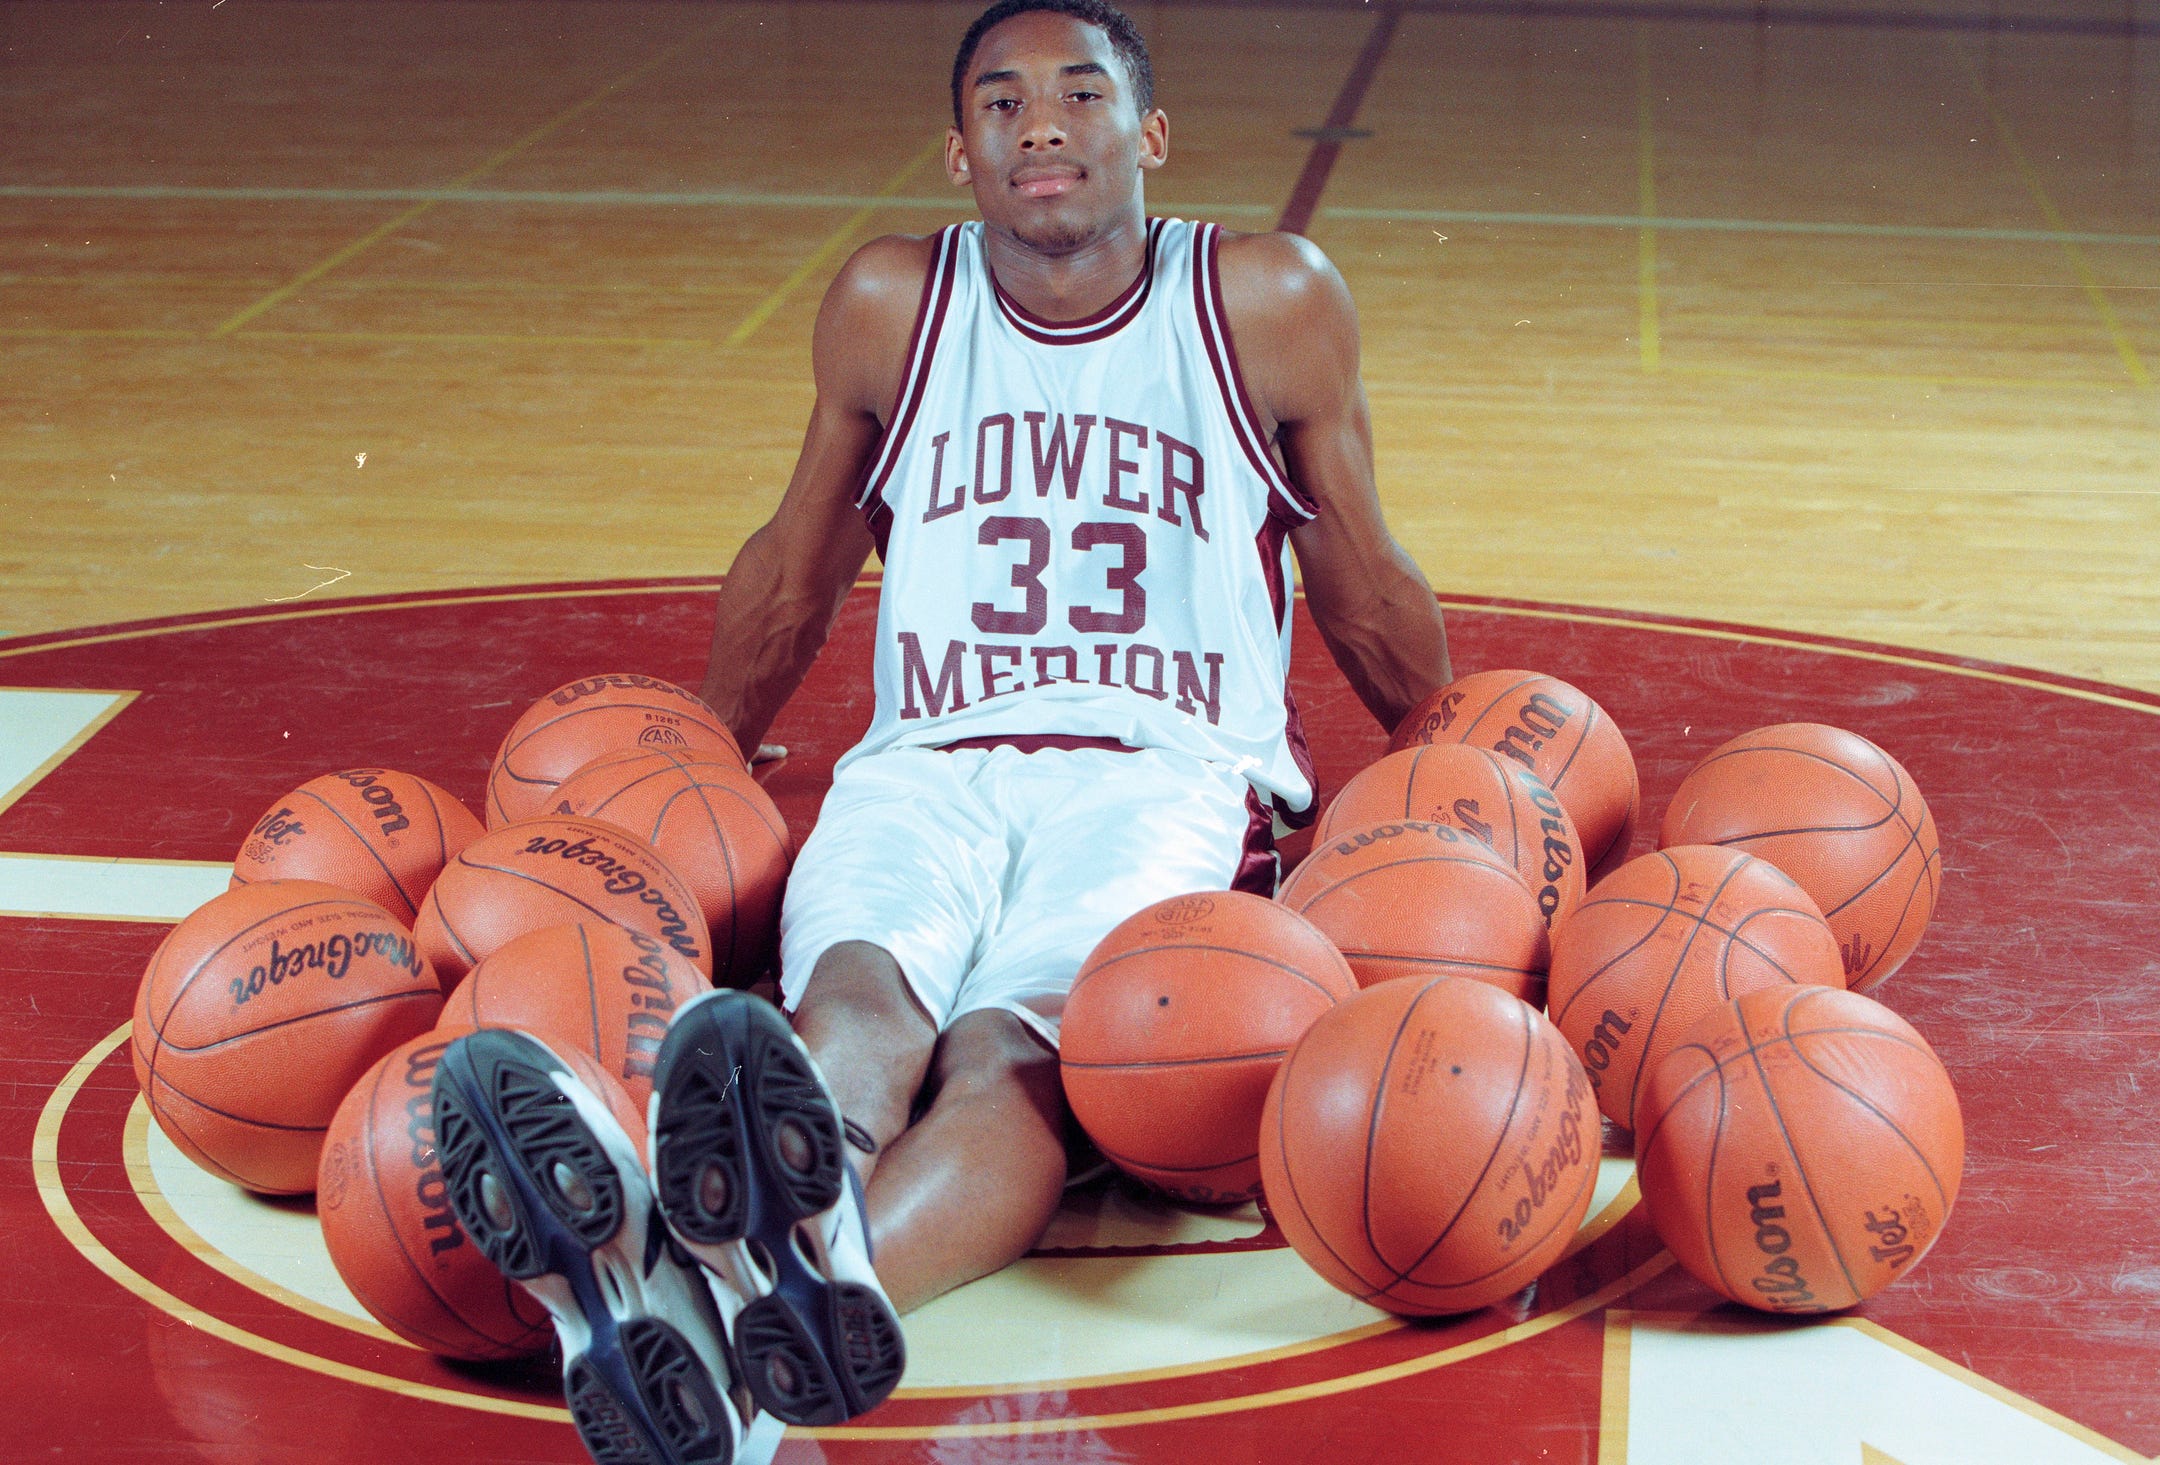 Kobe Bryant #33 Lower Merion High School Jersey